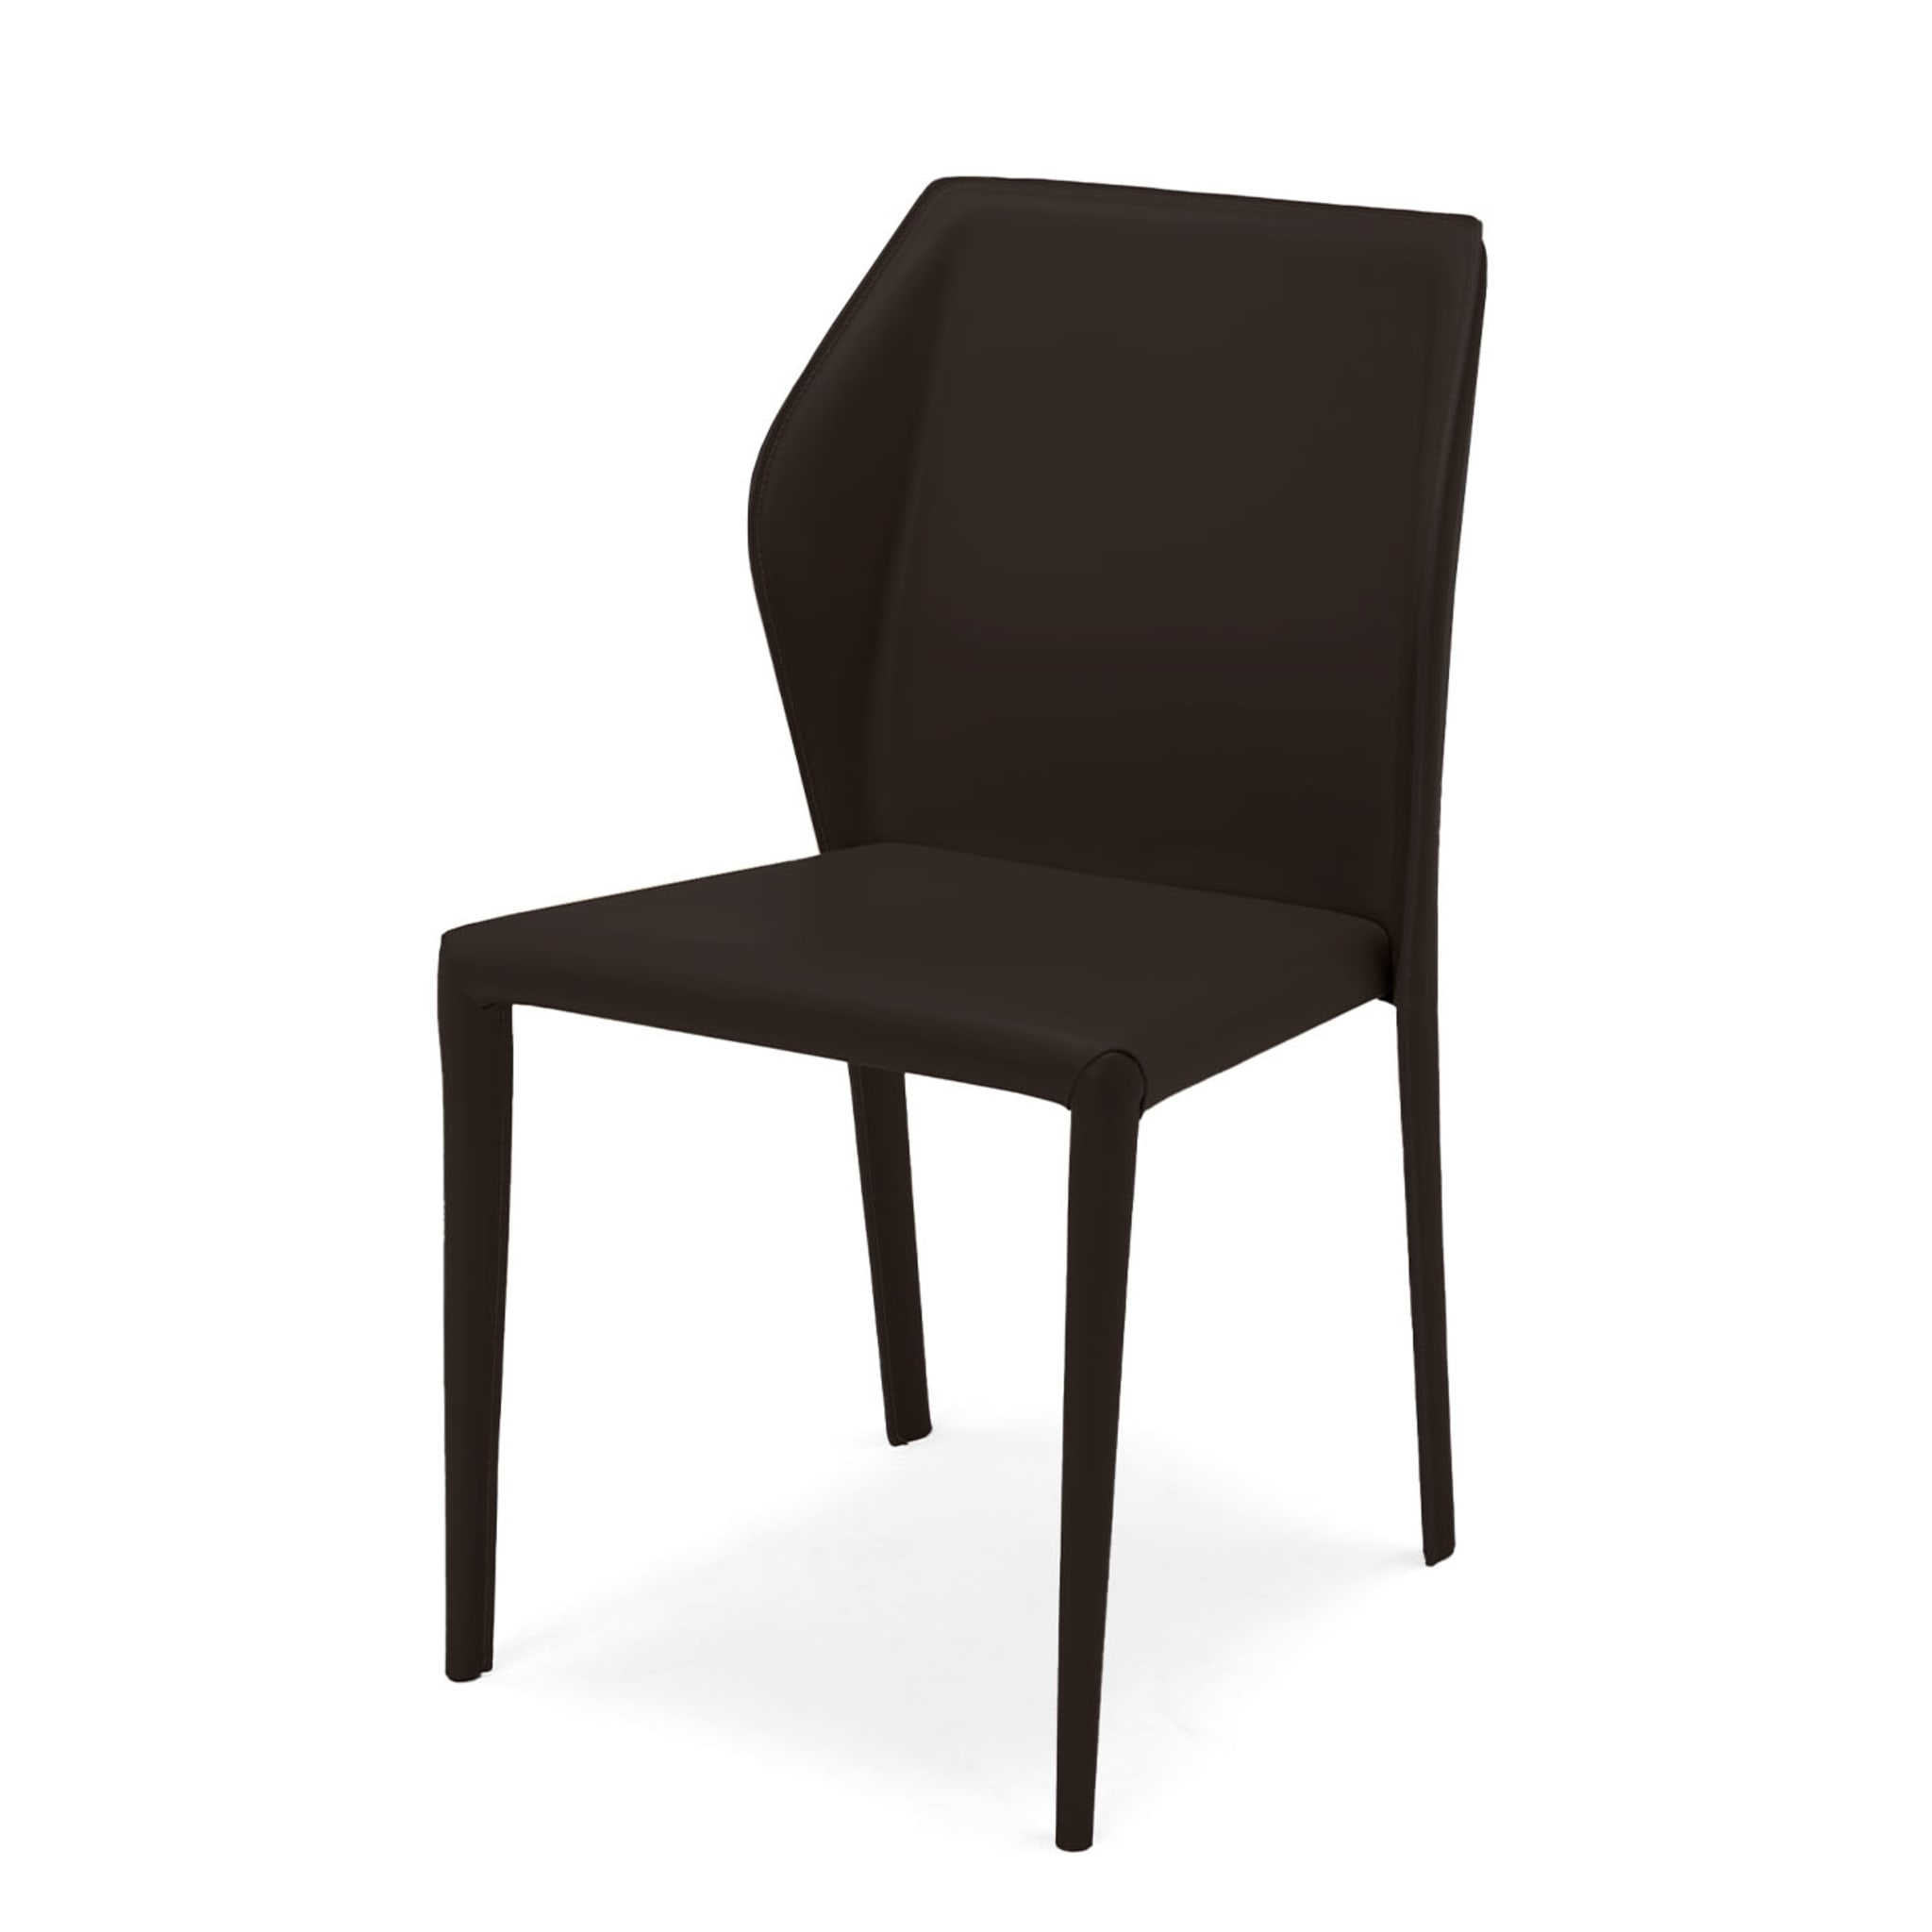 Set of 2 Fold Chair #2 - Alternative view 1